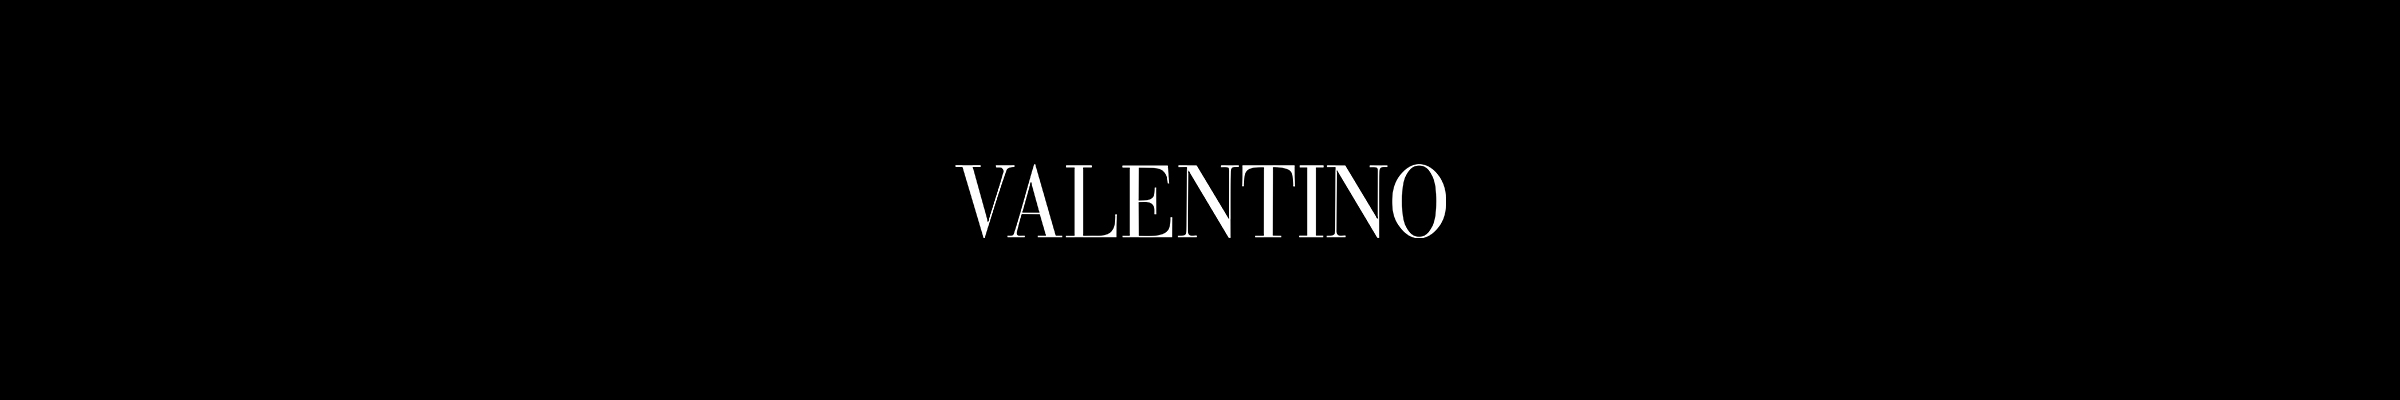 valentino-banner